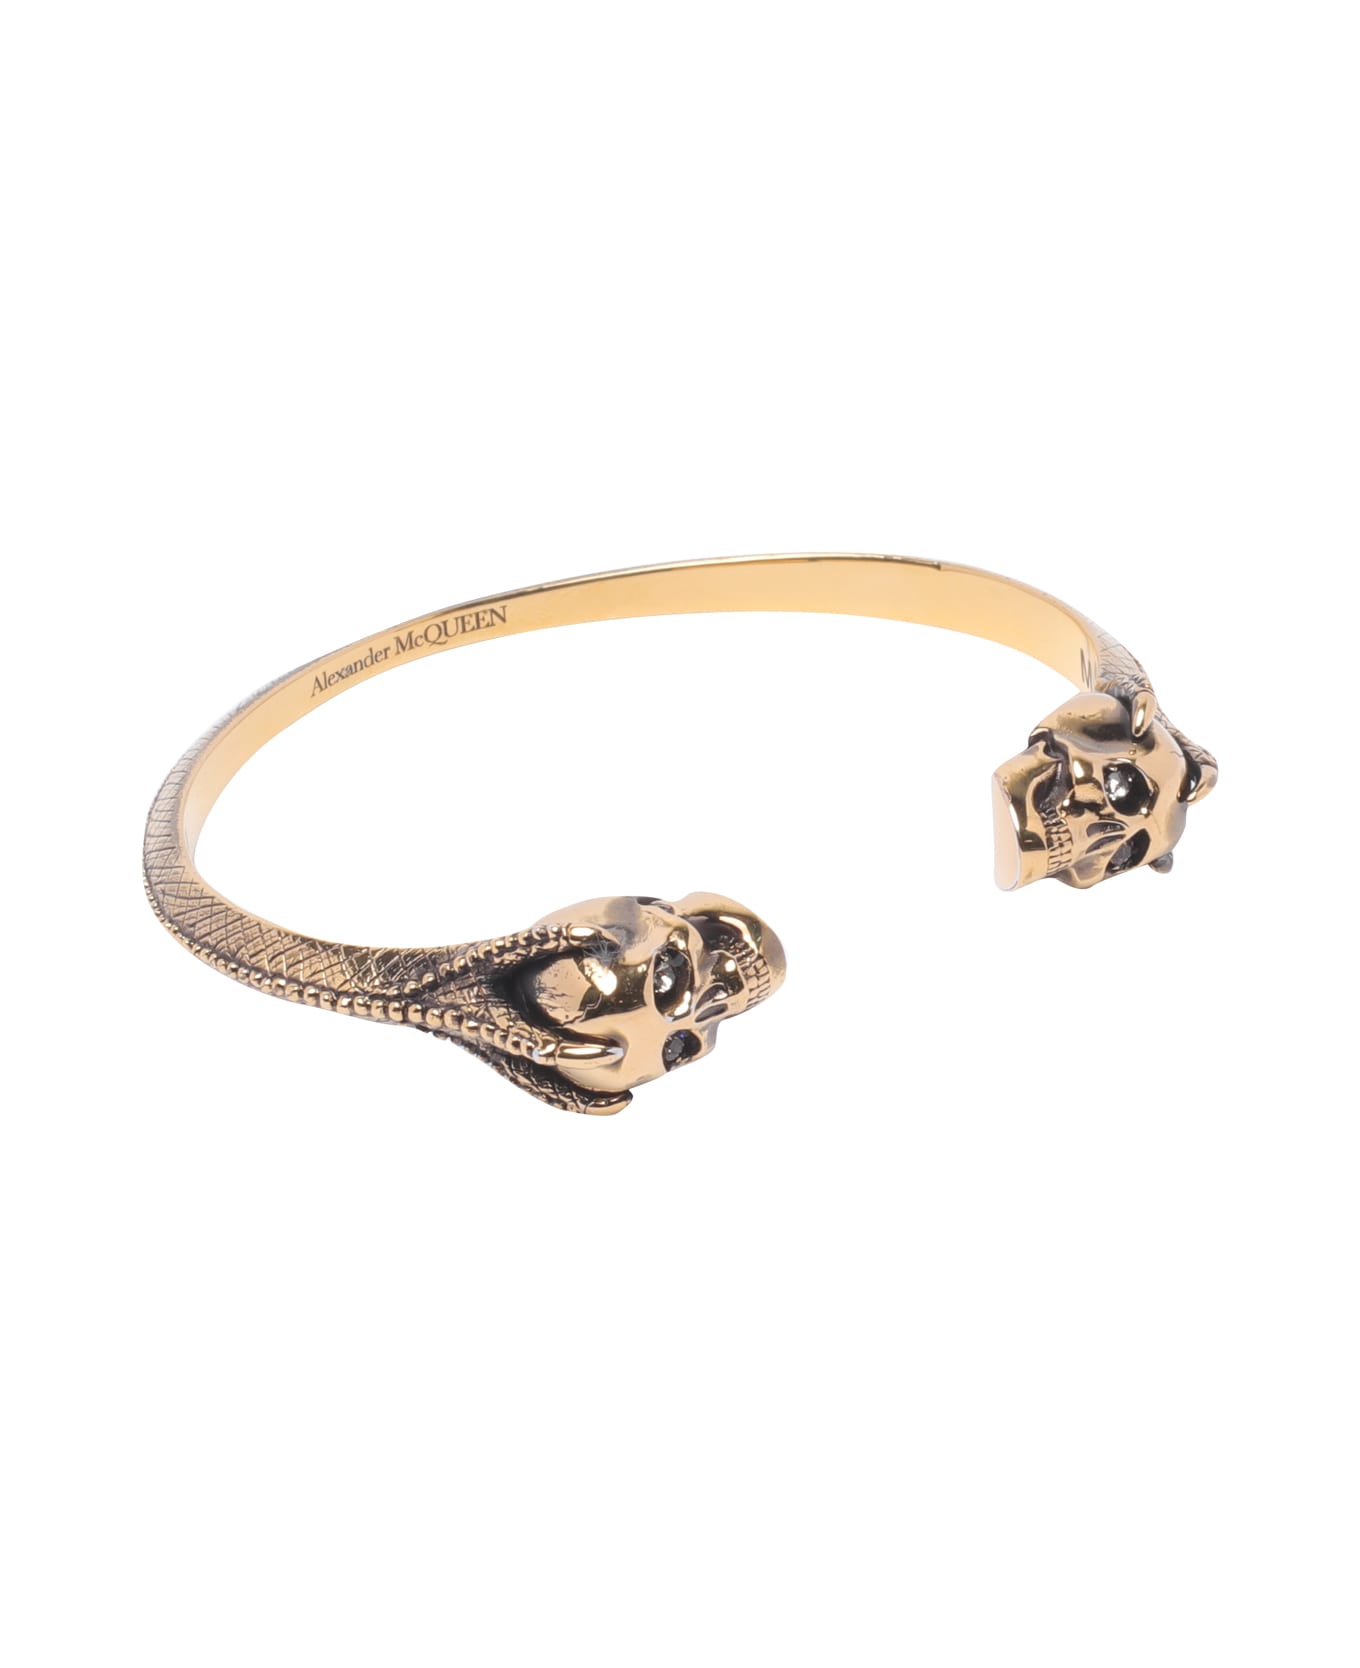 Alexander McQueen Skull Bracelet - Golden